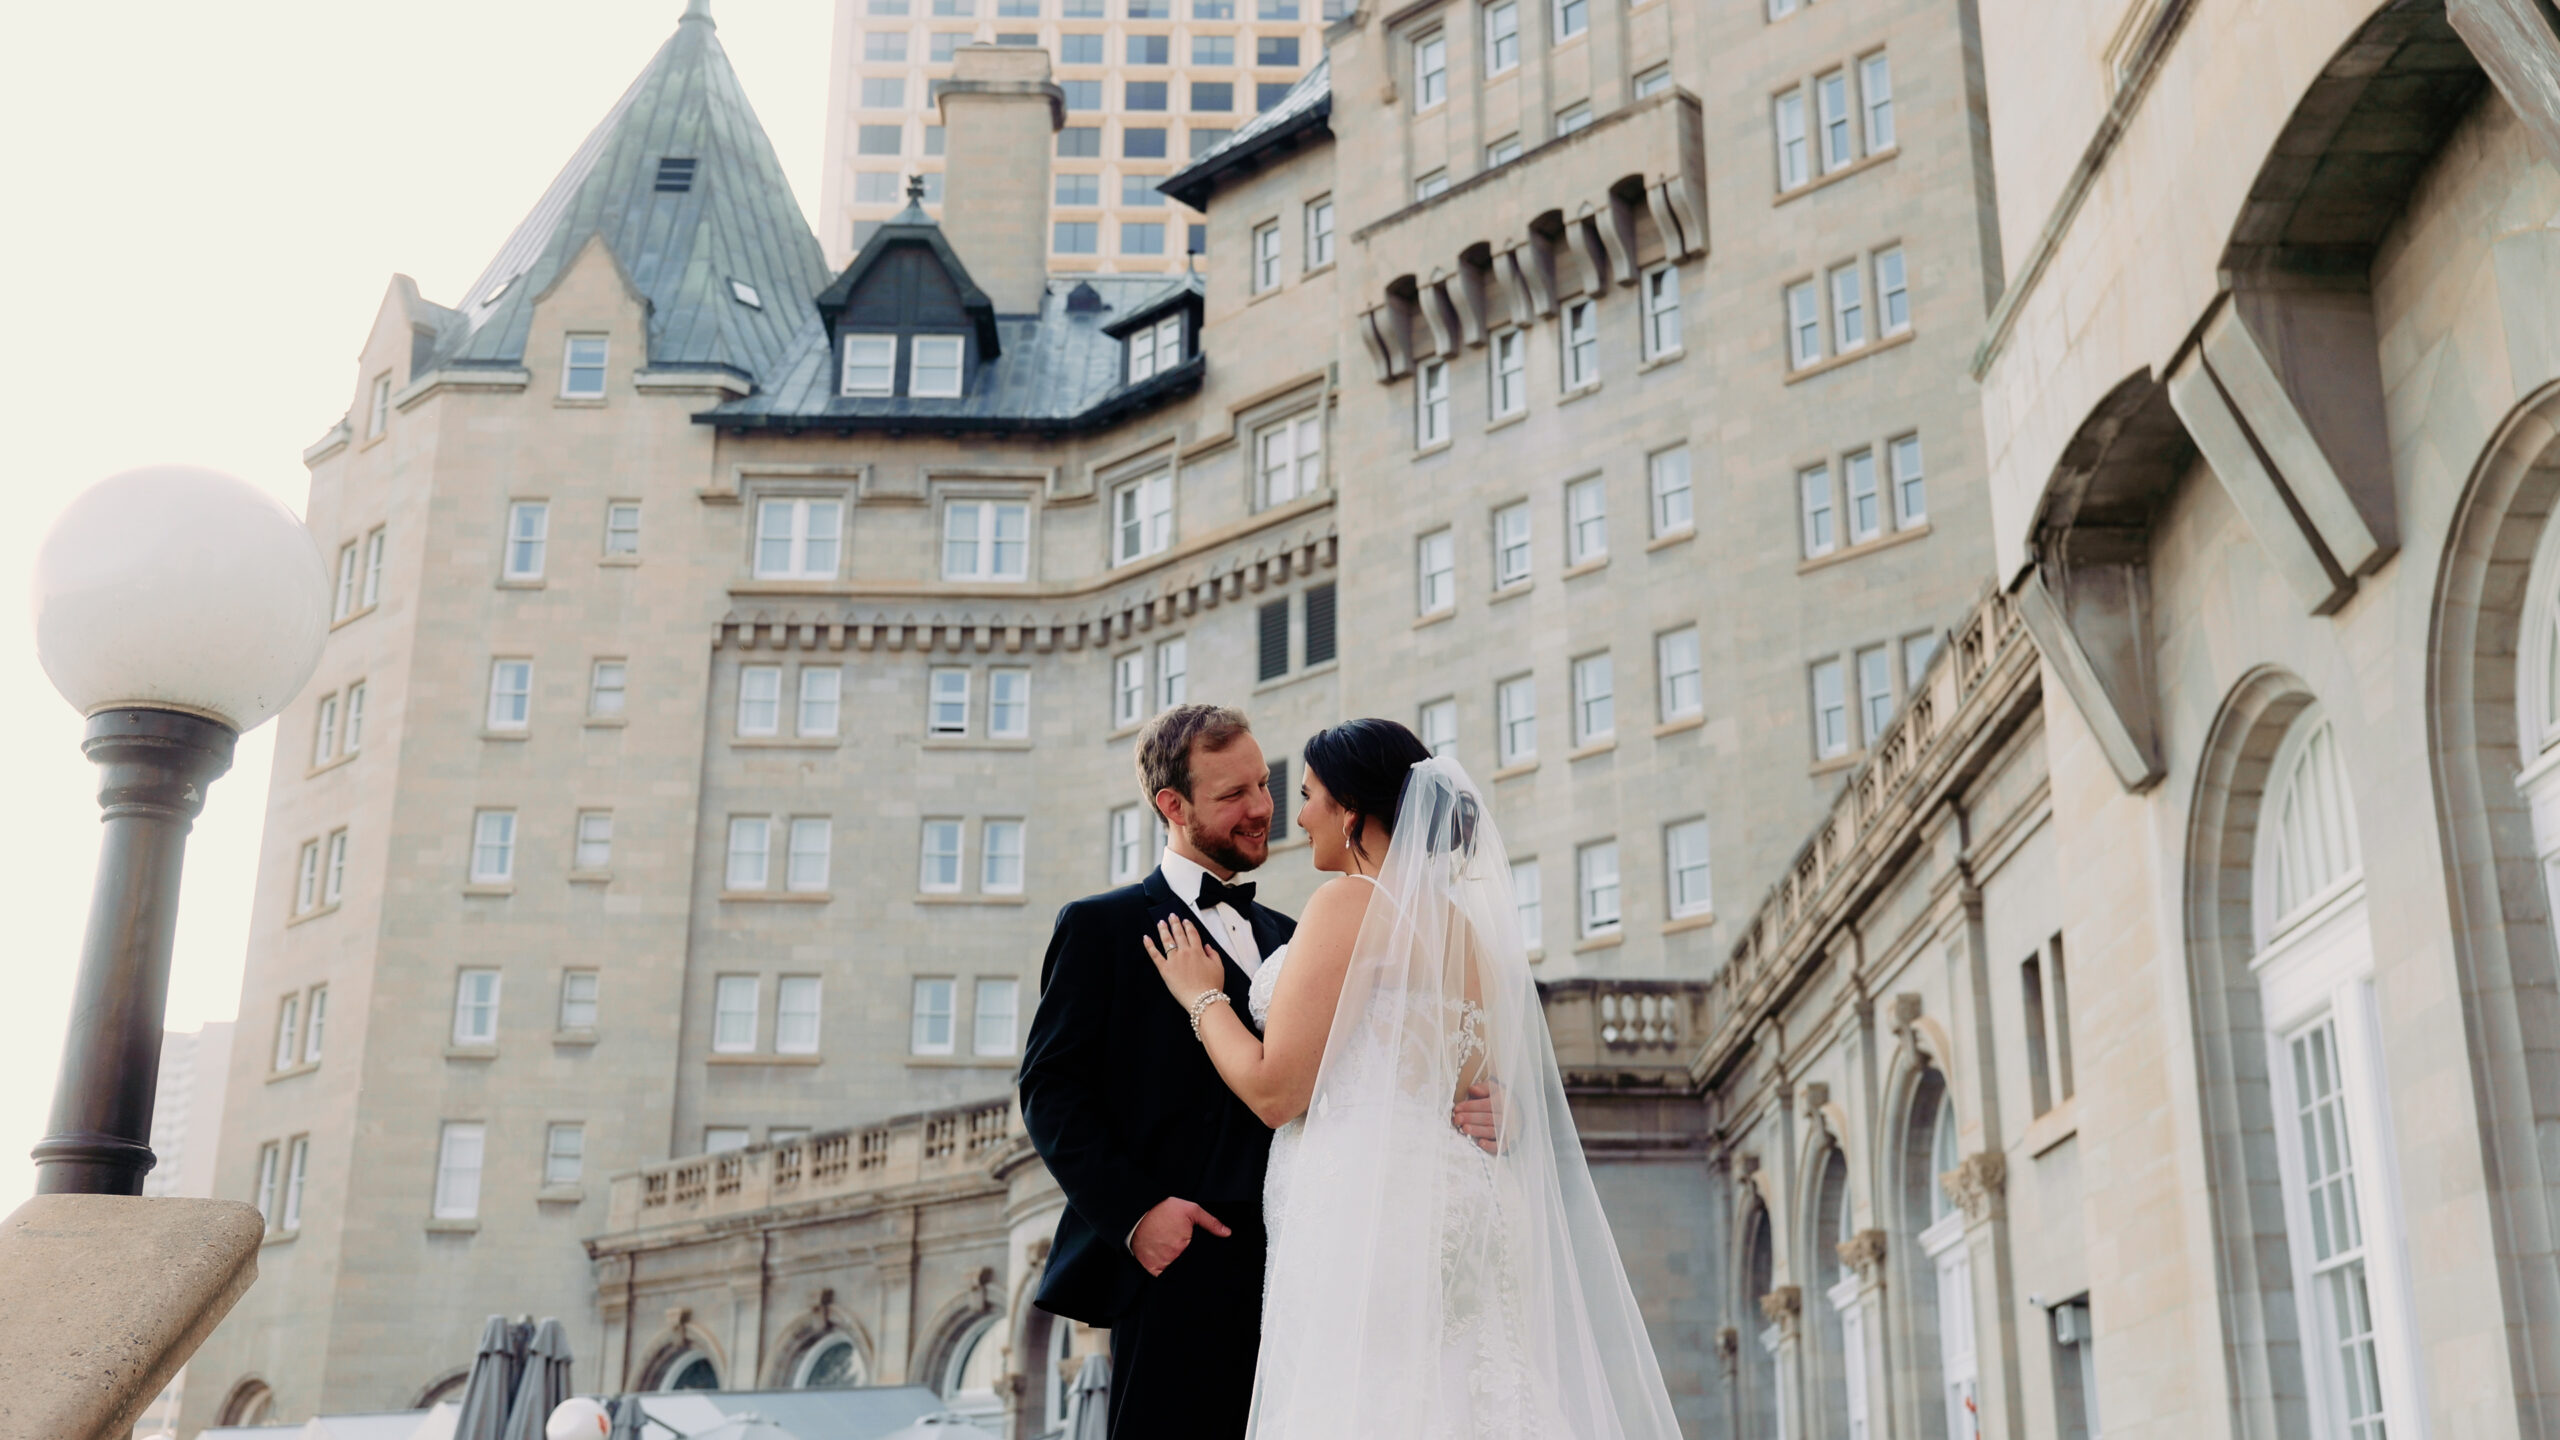 Wedding videographer Edmonton fairmont hotel Macdonald